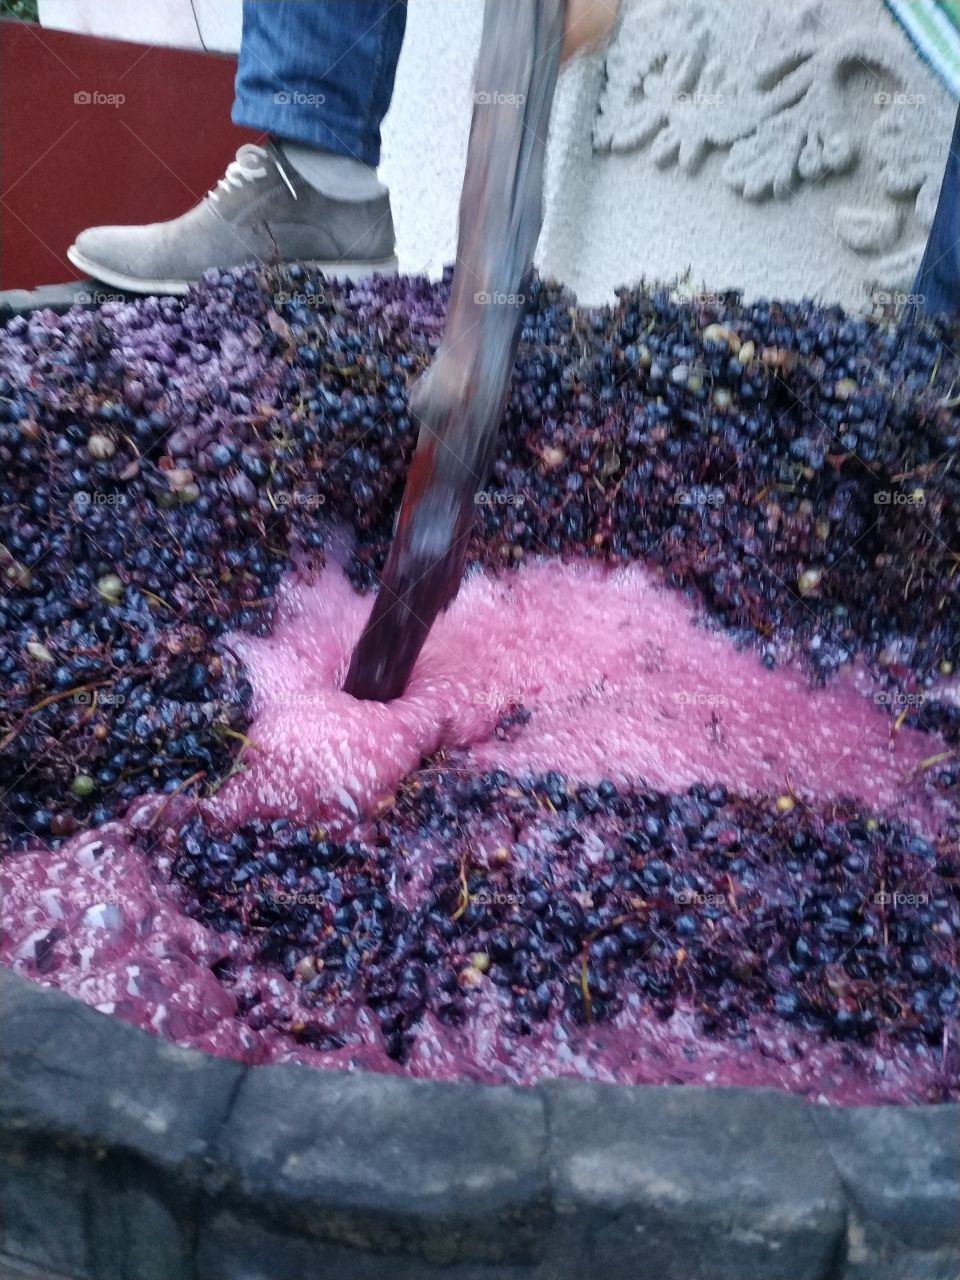 Wine making